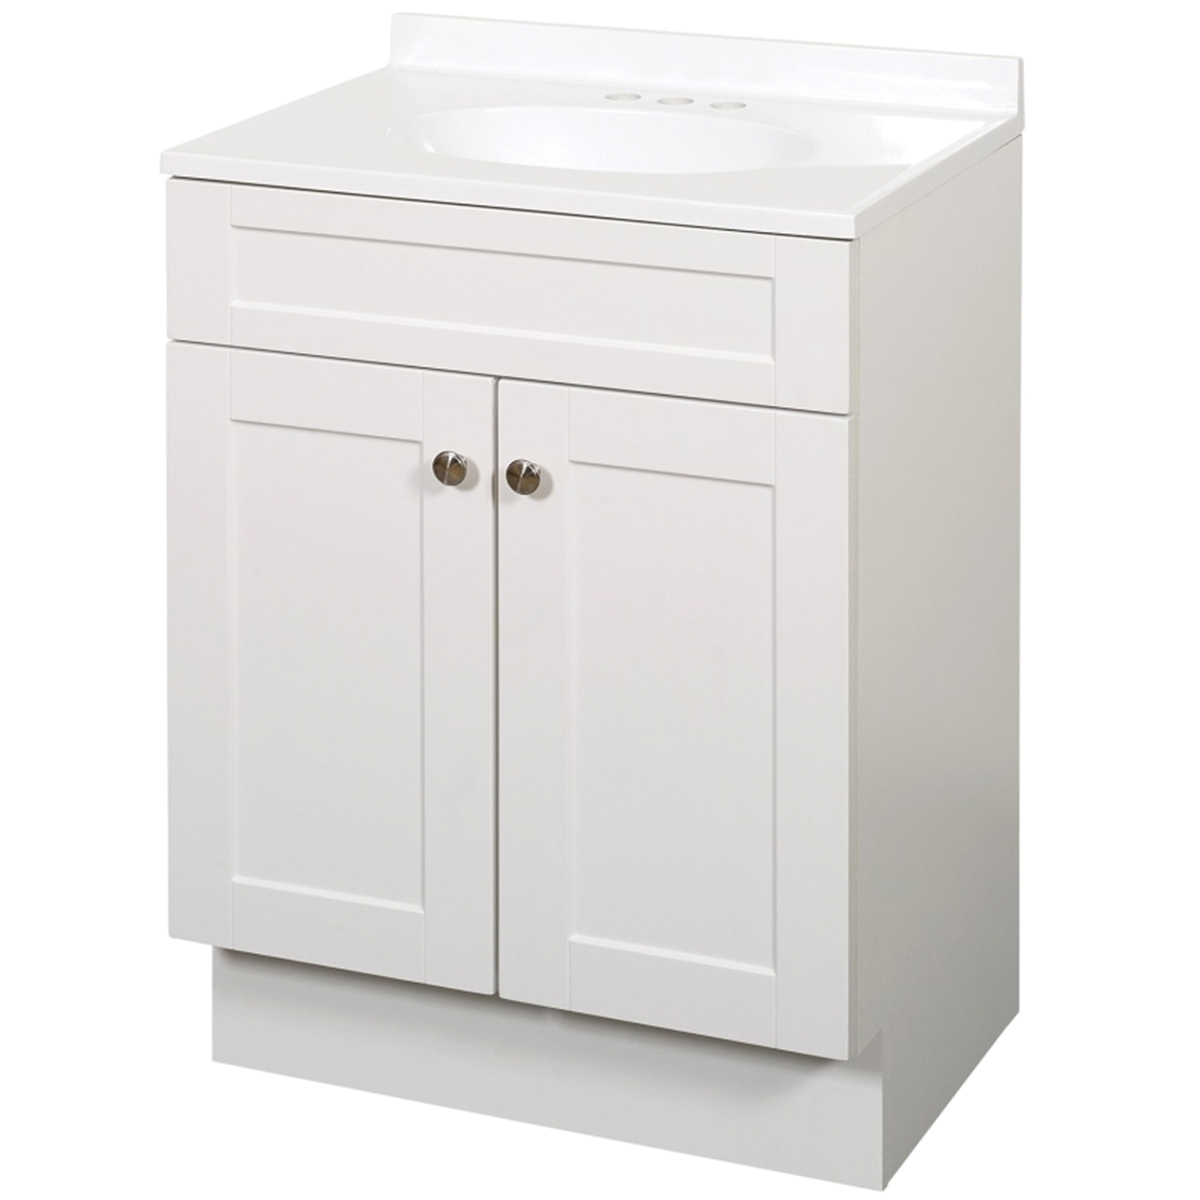 SBC24WW 2-Door Shaker Vanity with Top, Wood, White, Cultured Marble Sink, White Sink